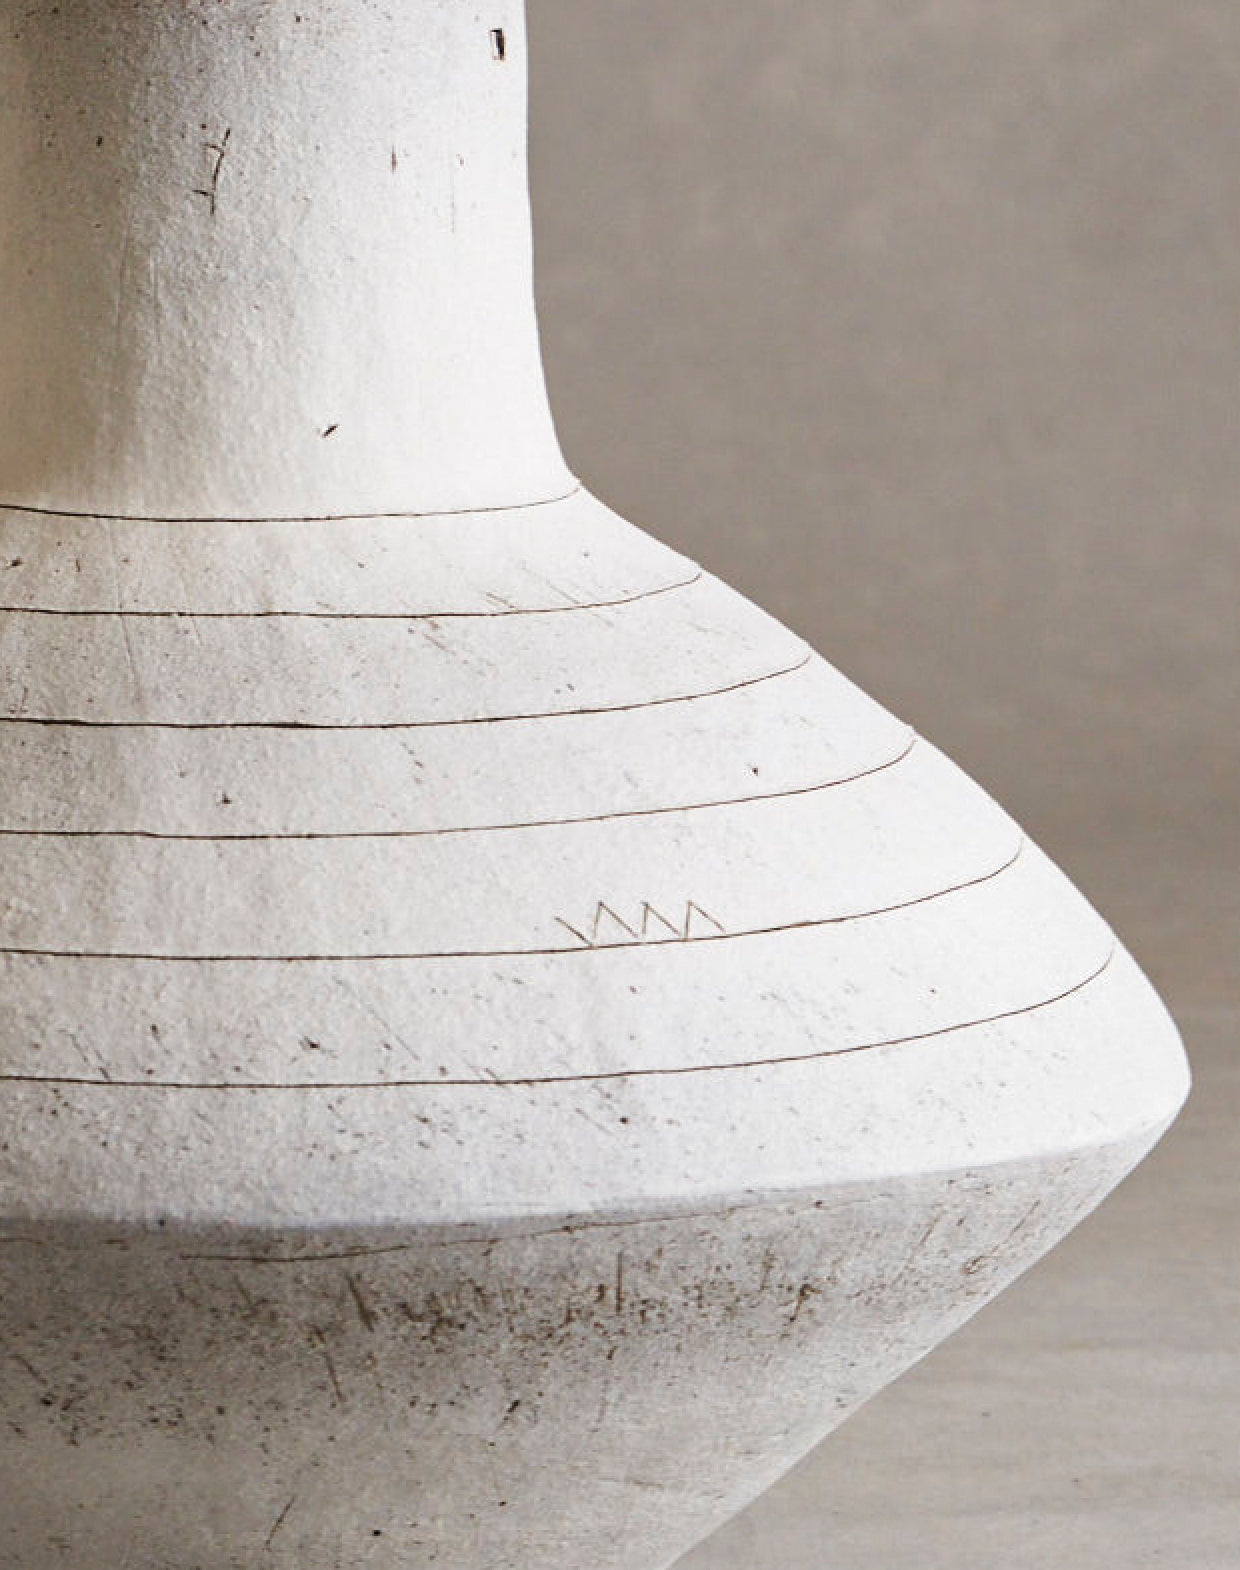 Rick Hintze Coiled Stoneware Vessel, "Untitled" No. 11